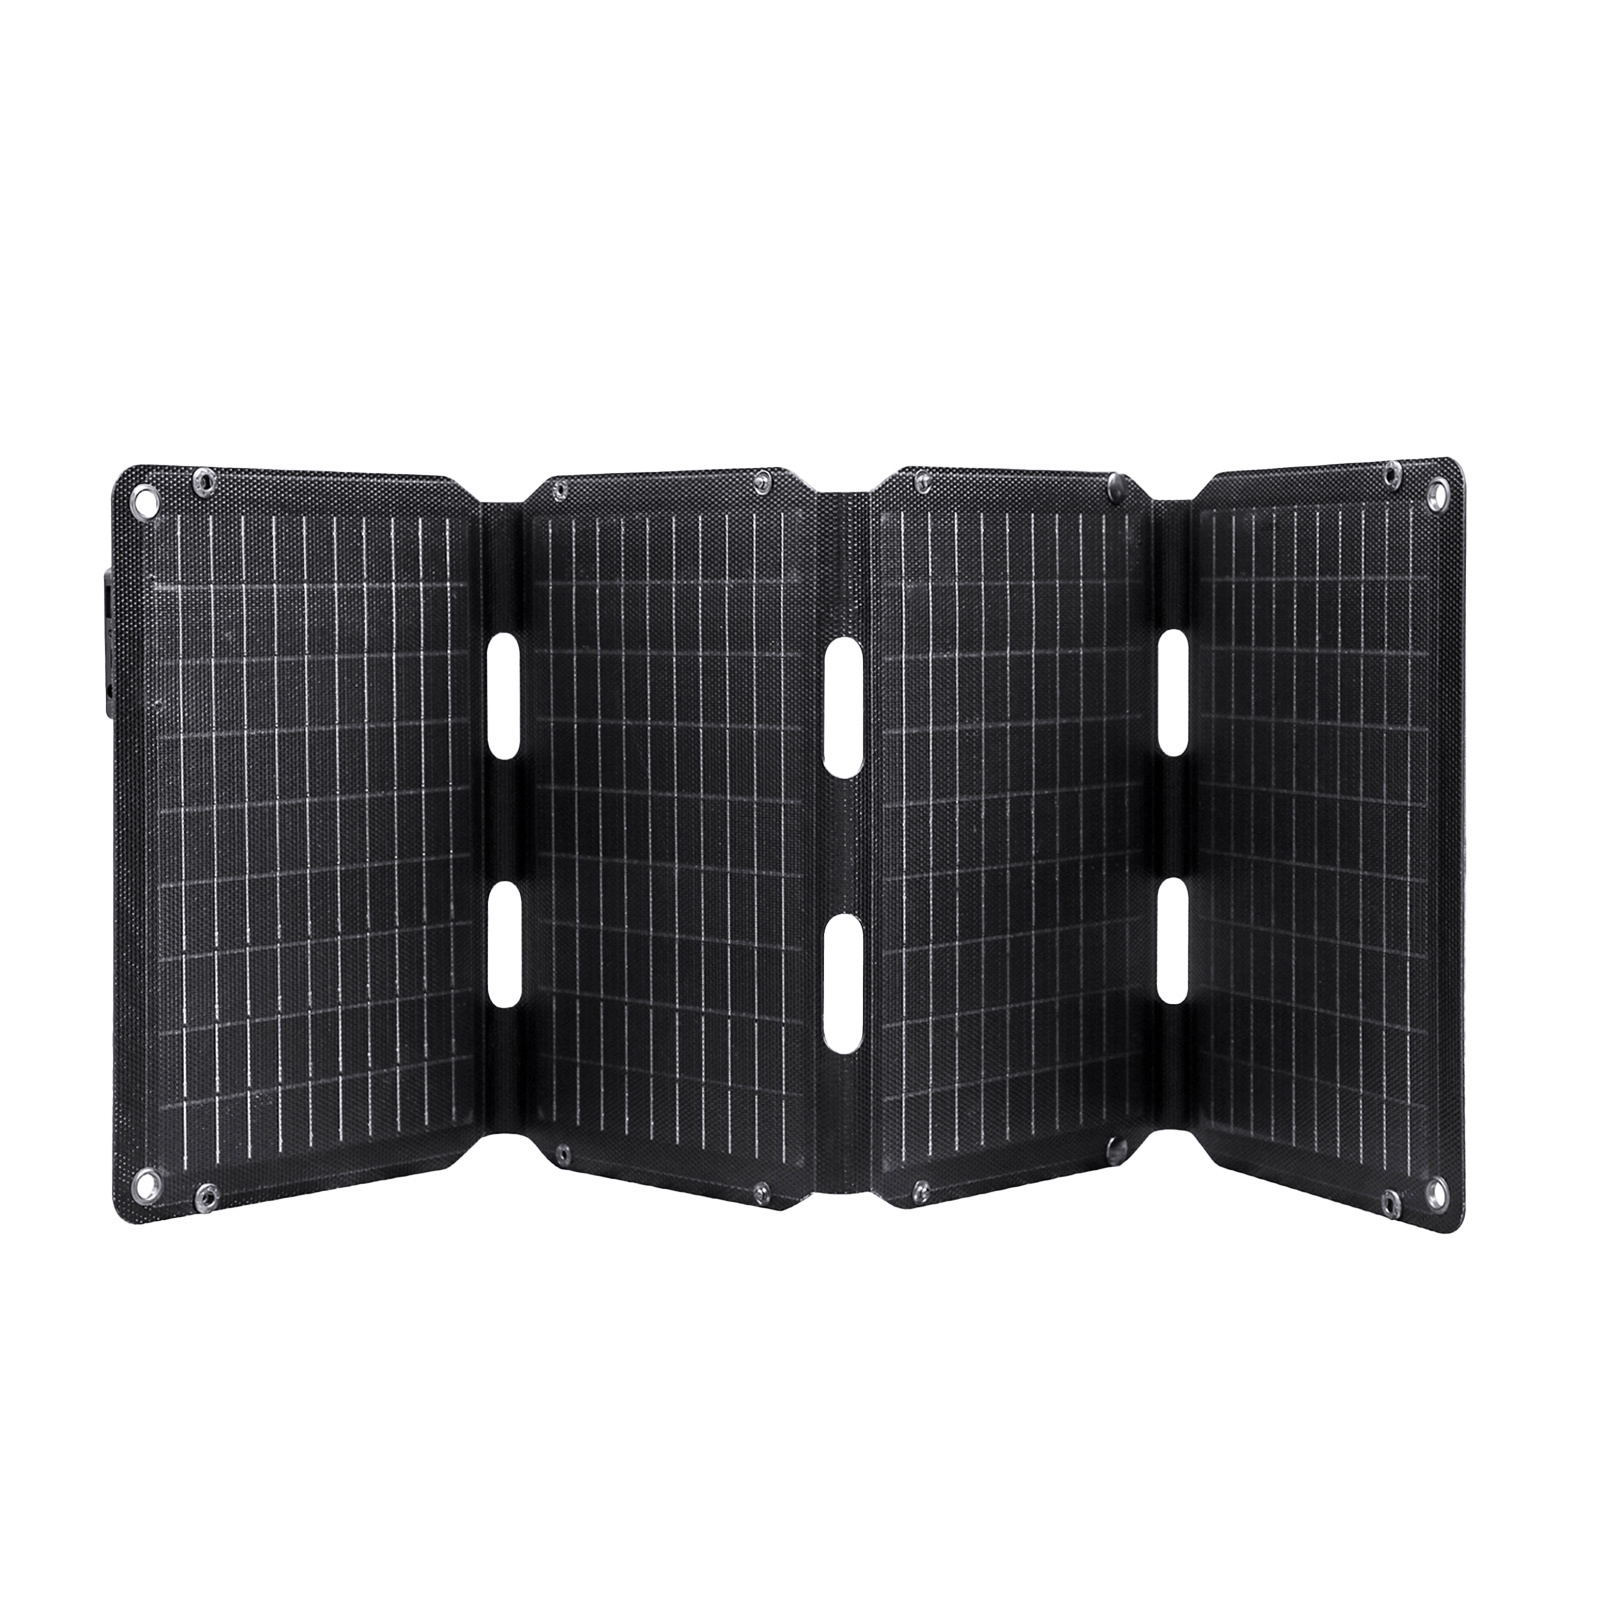 JumpsPower 40W Portable Solar Panel